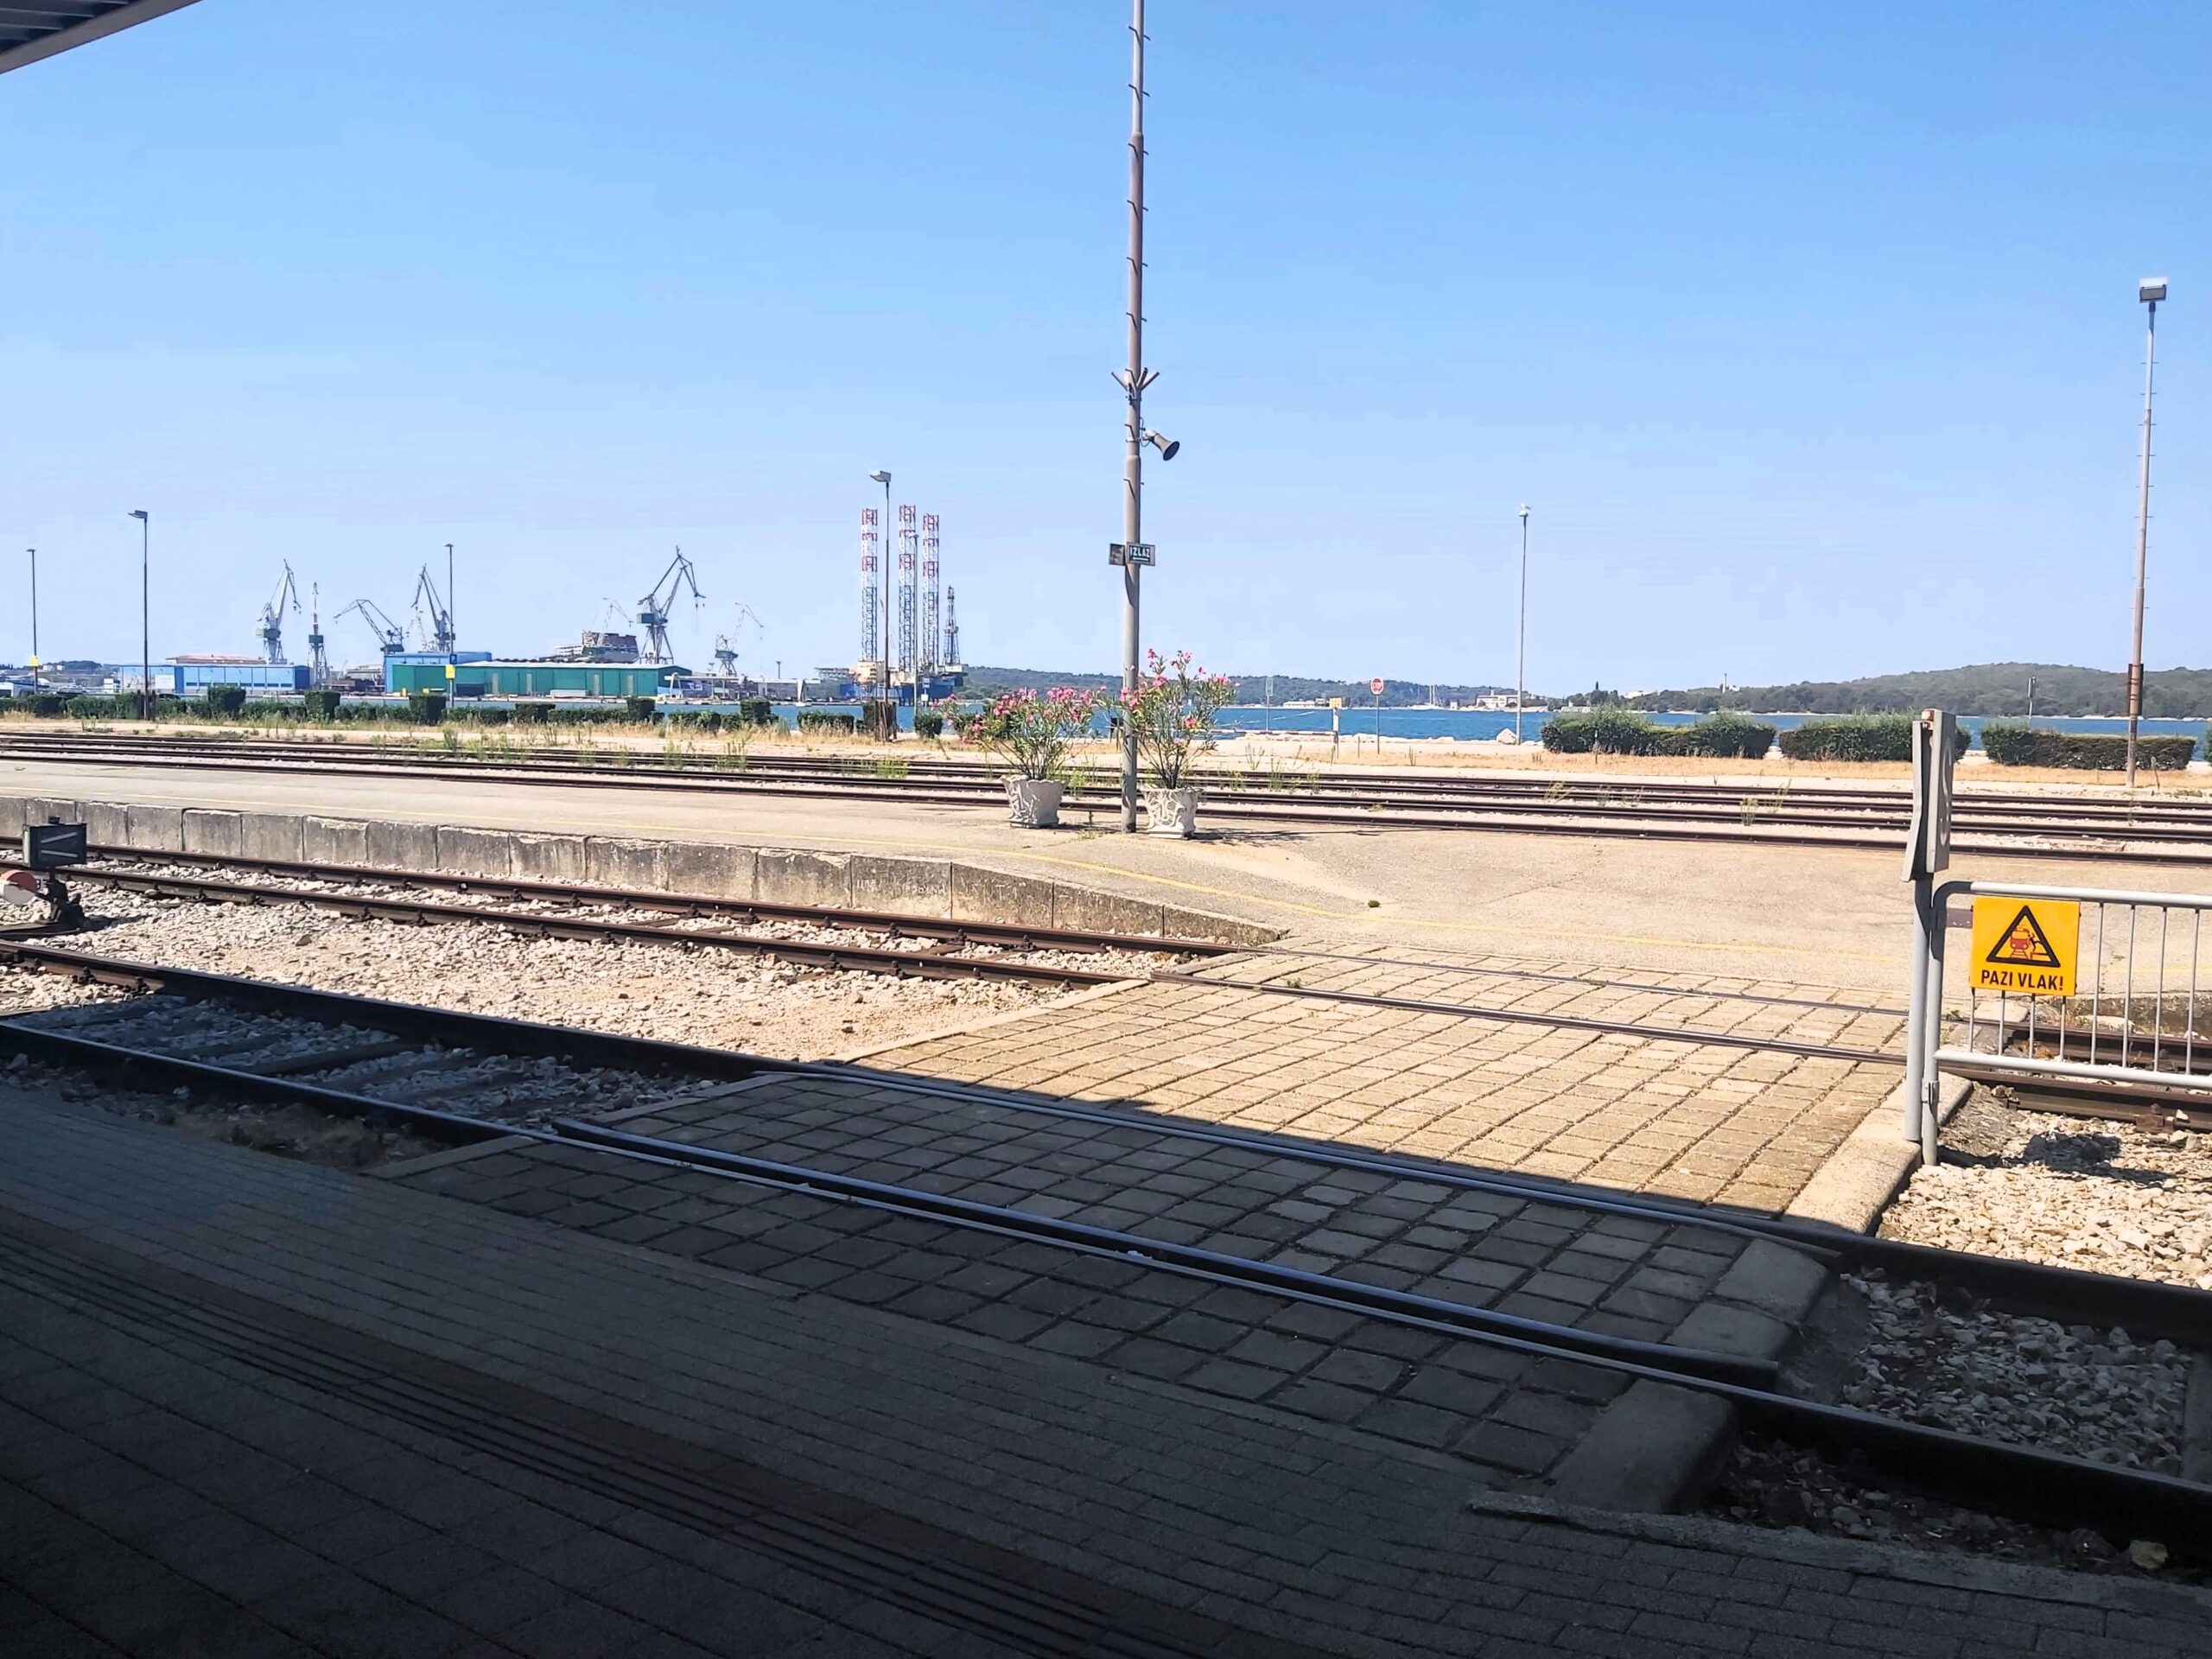 The view from Pula train station platform, Croatia